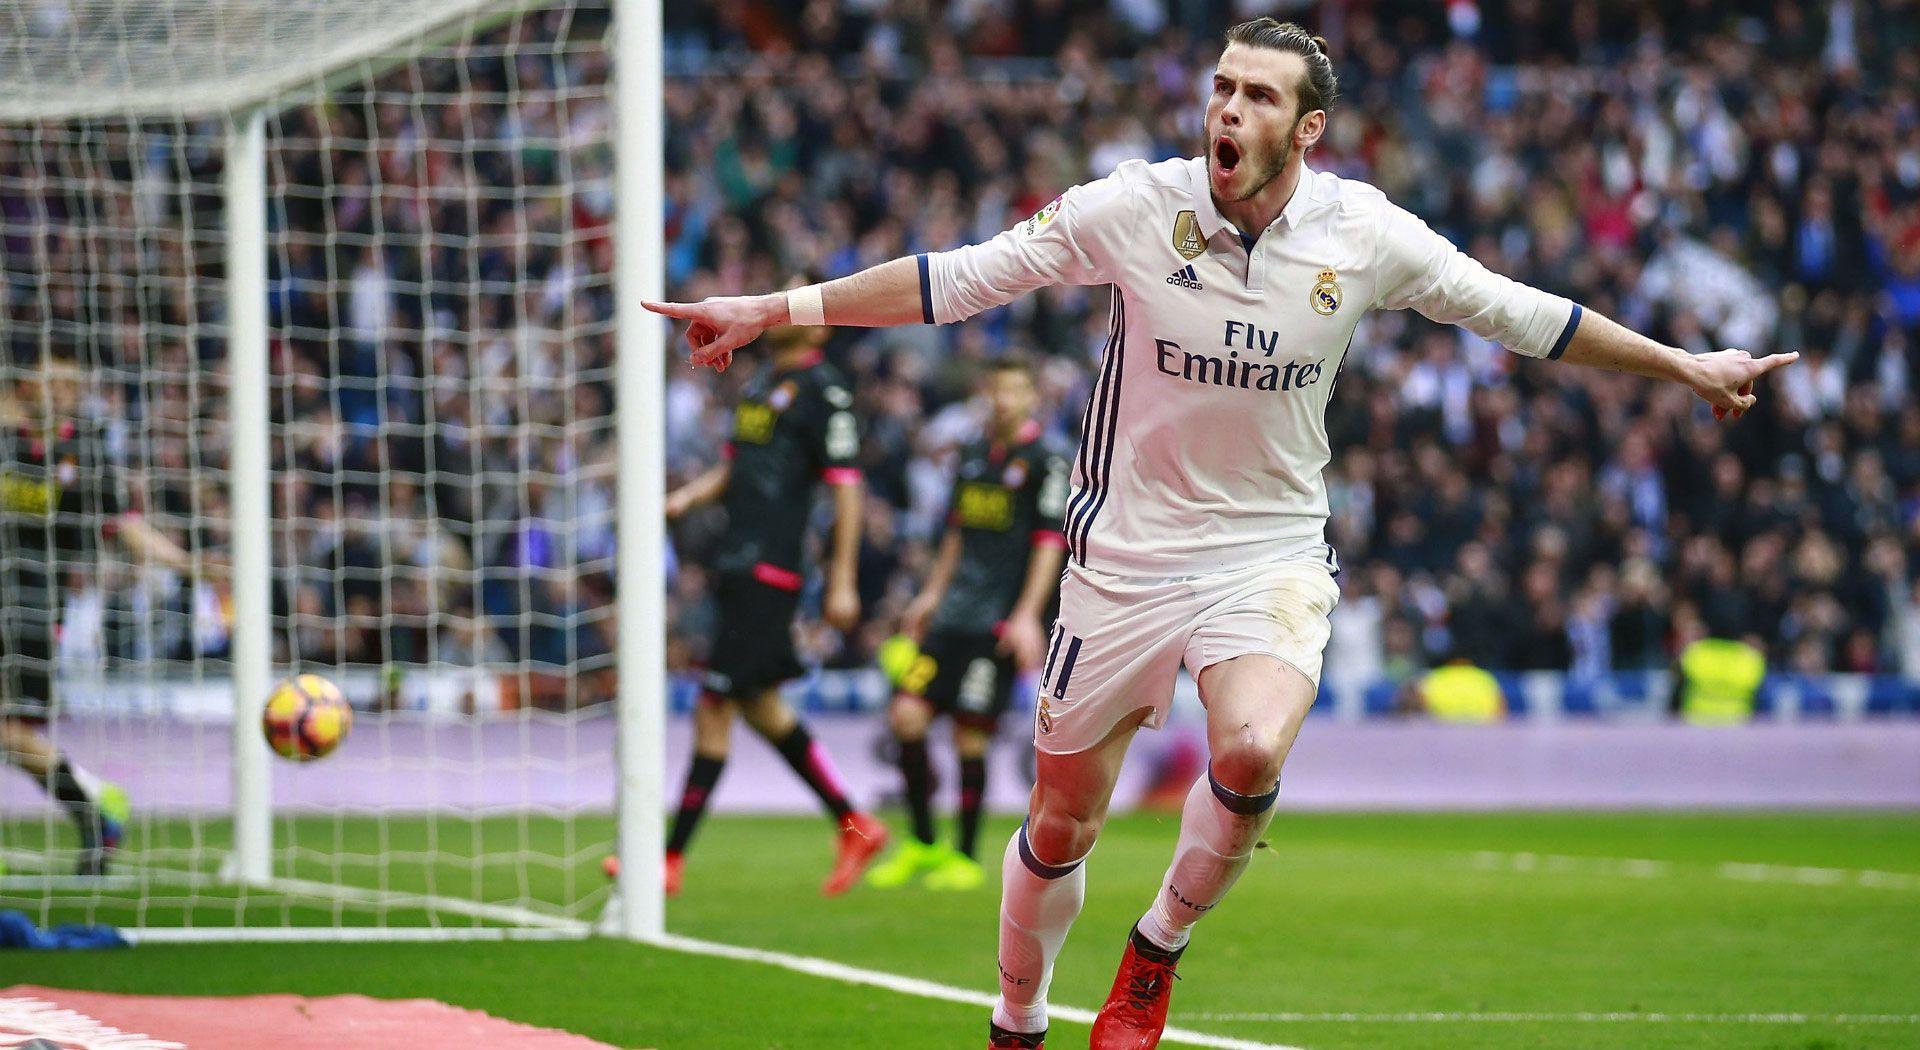 Latest Gareth Bale HD Wallpaper Image Photo 2018 Free Download